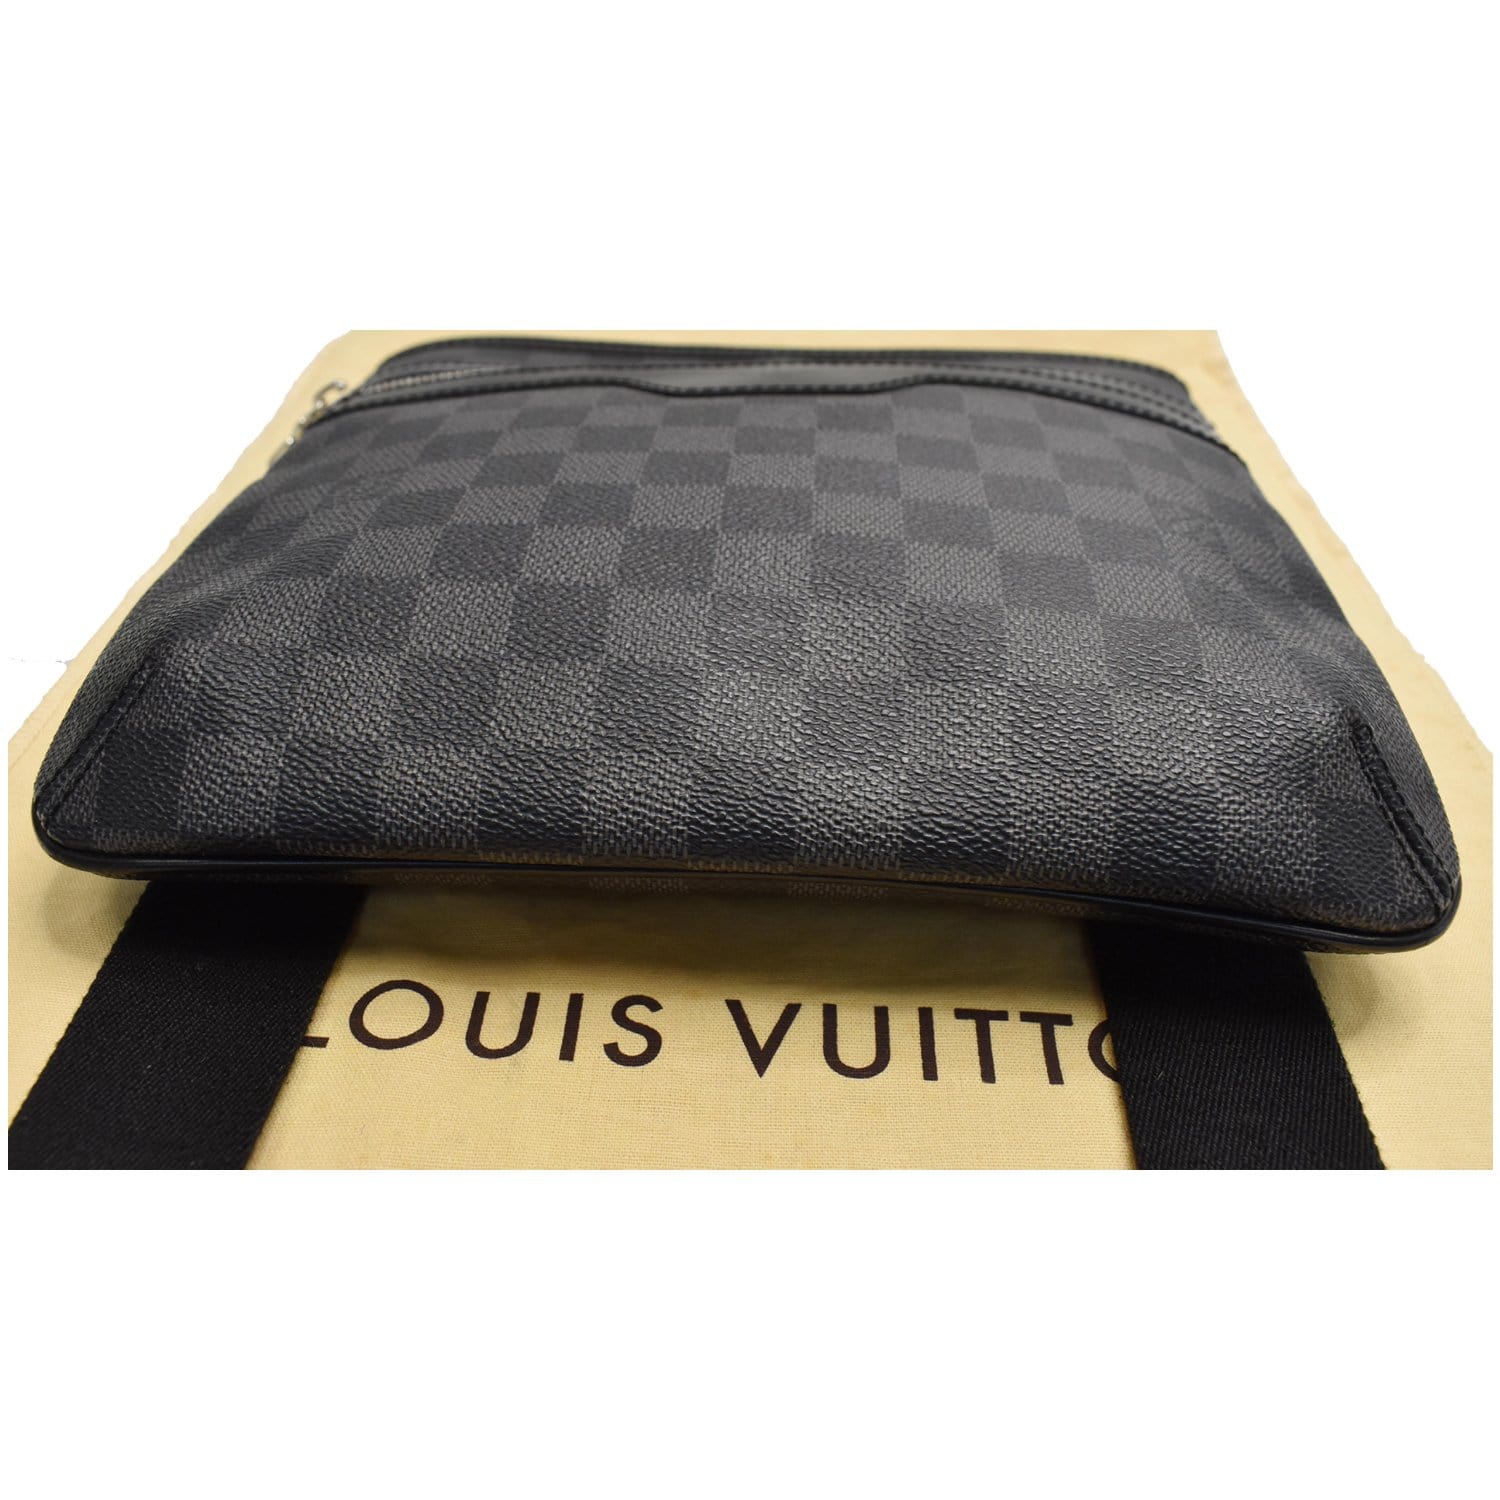 Louis Vuitton Damier Graphite Canvas Thomas Messenger Bag - My